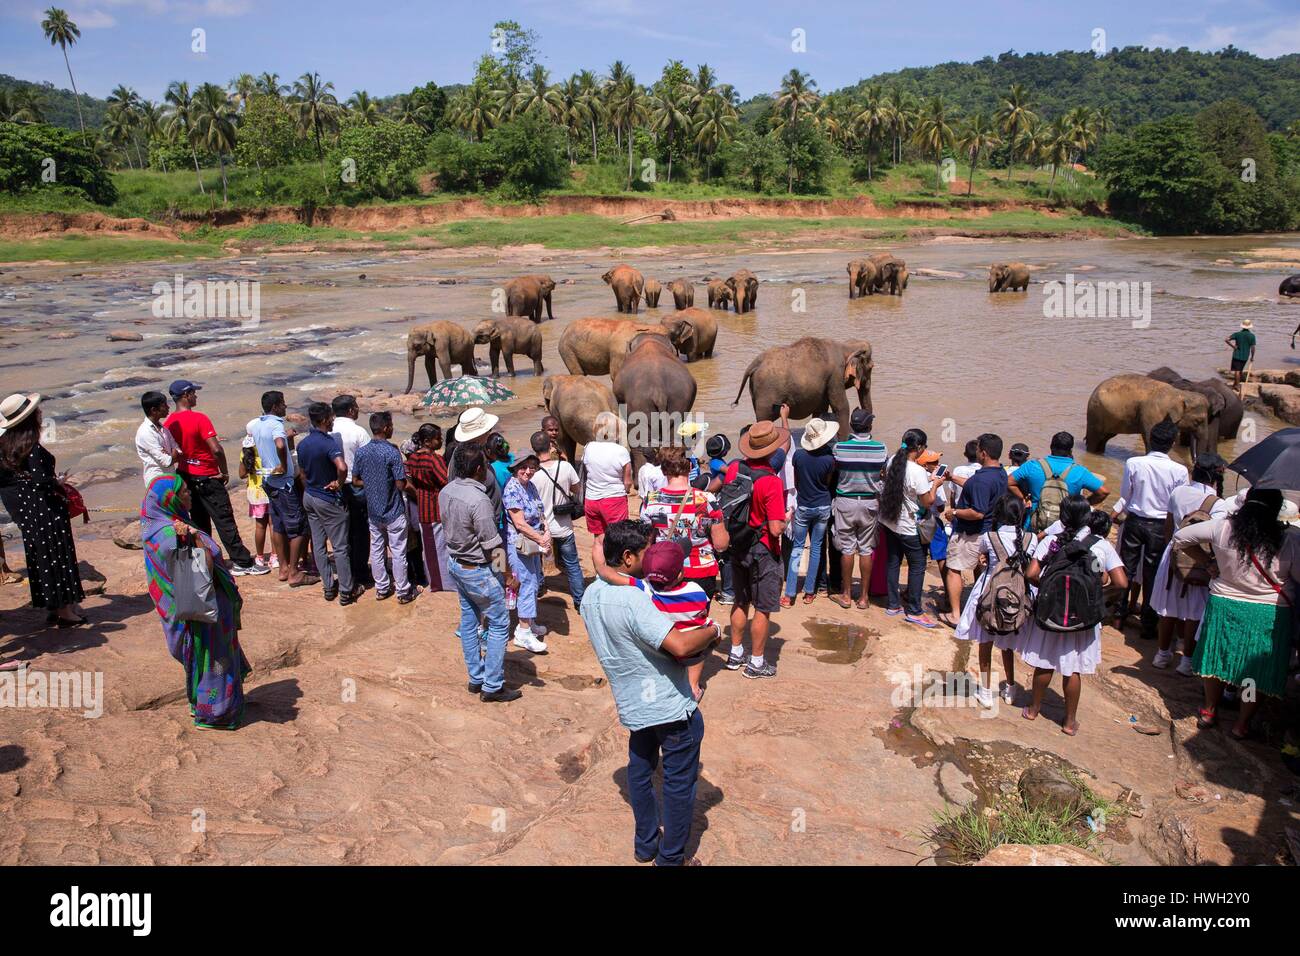 Sri Lanka, Pinnawala, Sri lankan elephants (Elephas maximus maximus) from Pinnawala Elephant Orphanage bathing in the Maha Oya river with their carers nearby, part of a scheme run by the Sri Lankan Department of Wildlife Stock Photo